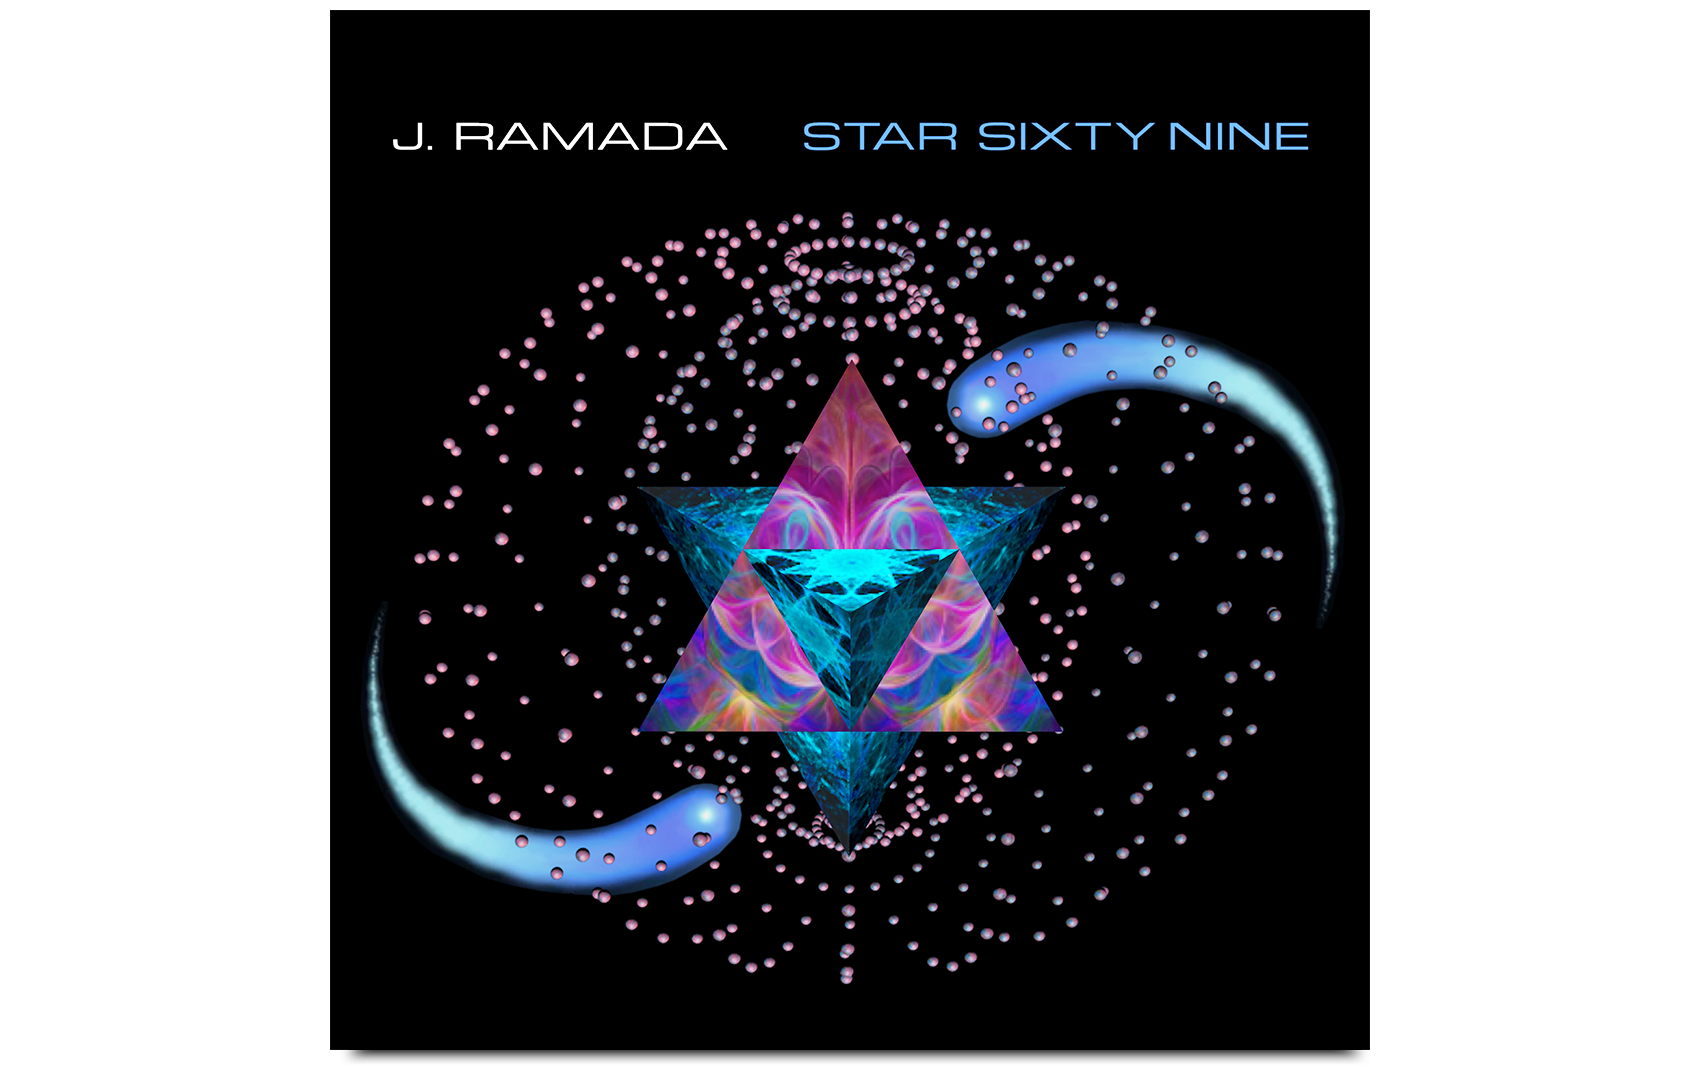 j.ramada star sixty nine digital single design